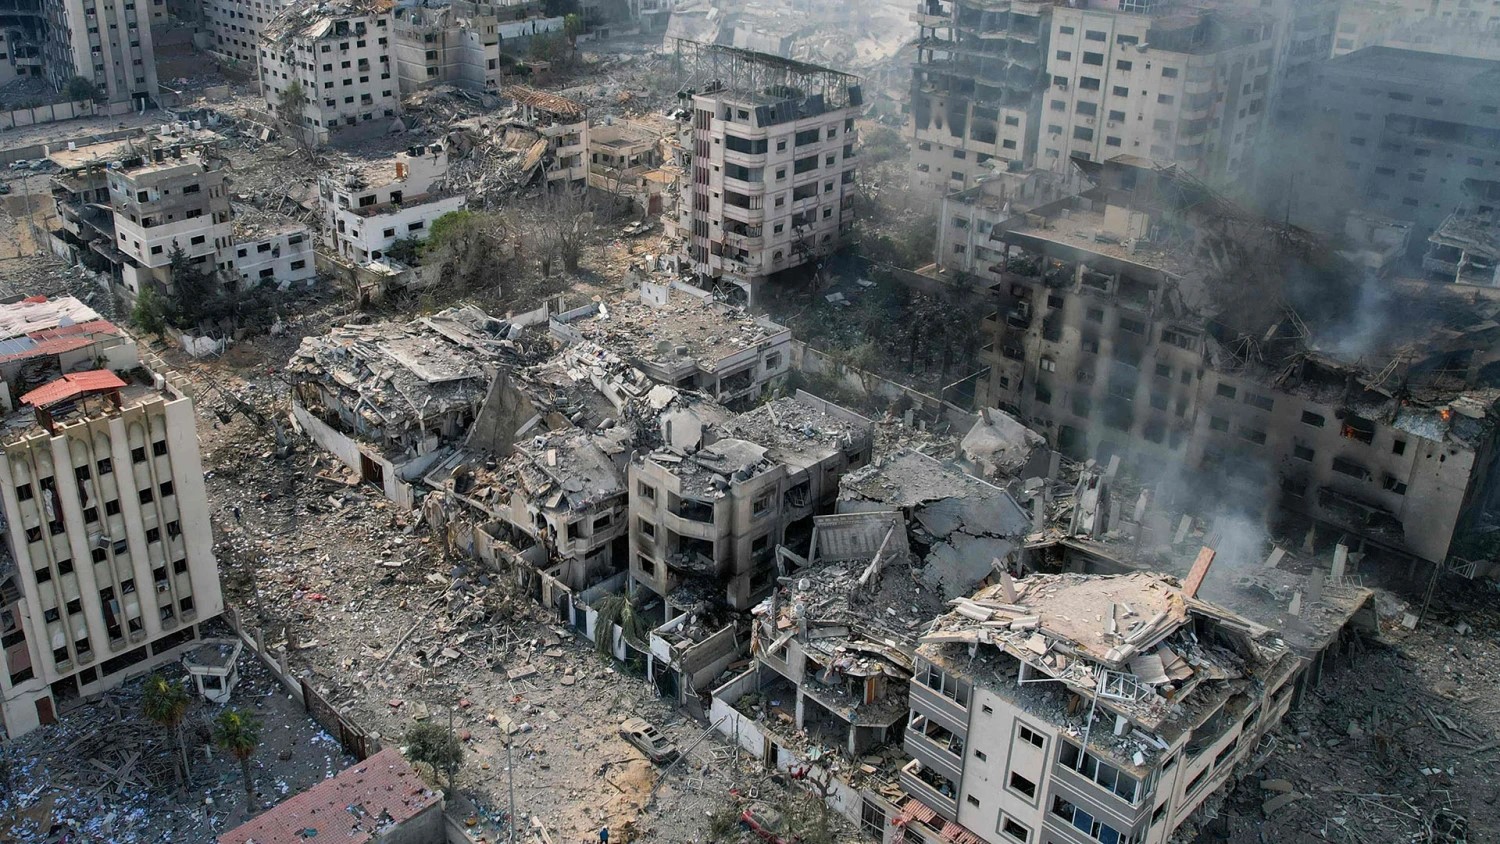 Israel destroyed over 70% of buildings in Gaza Strip